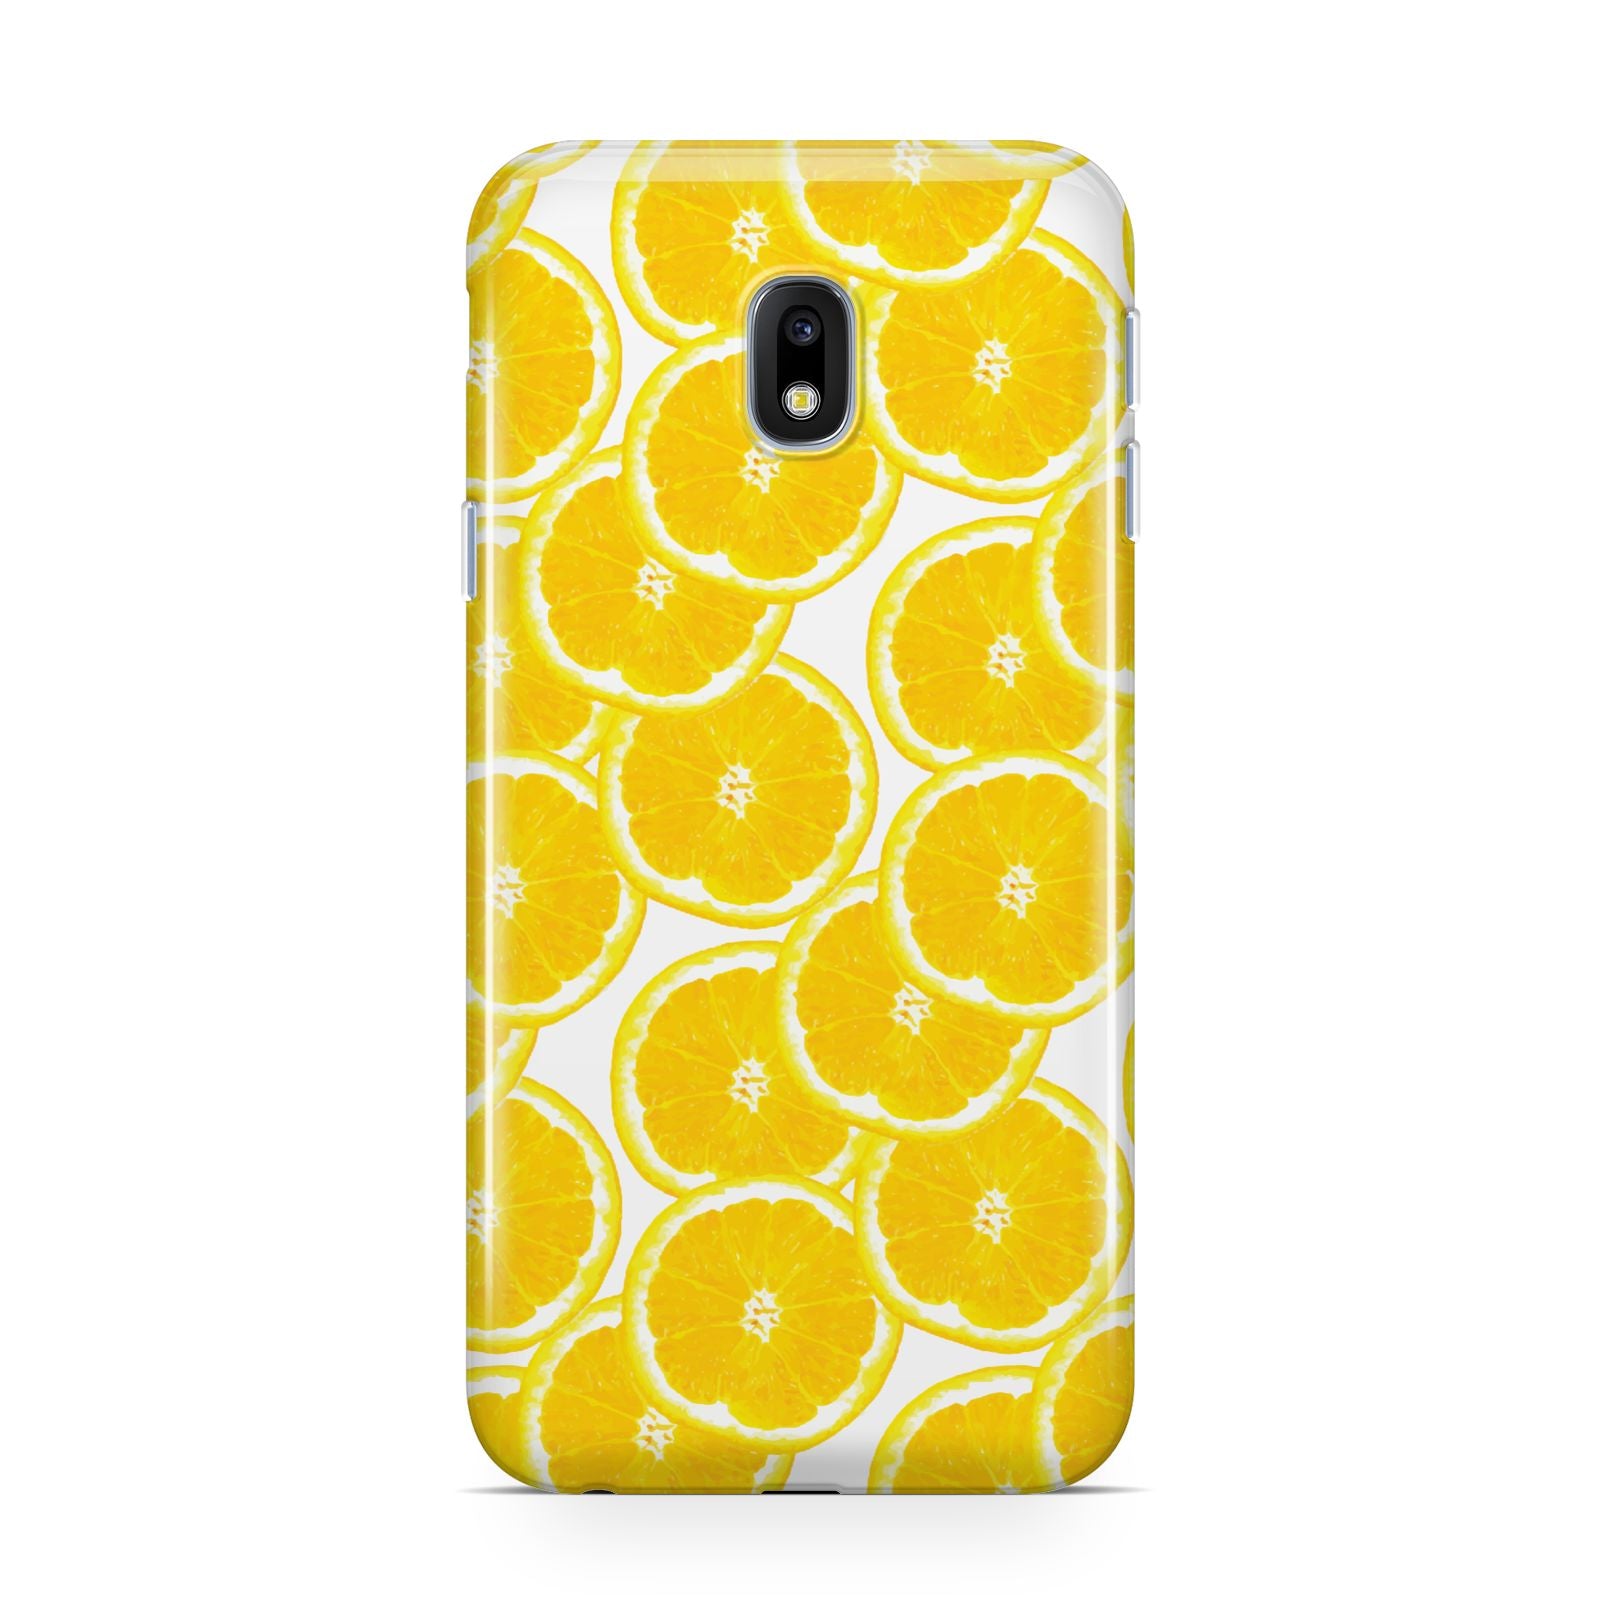 Lemon Fruit Slices Samsung Galaxy J3 2017 Case